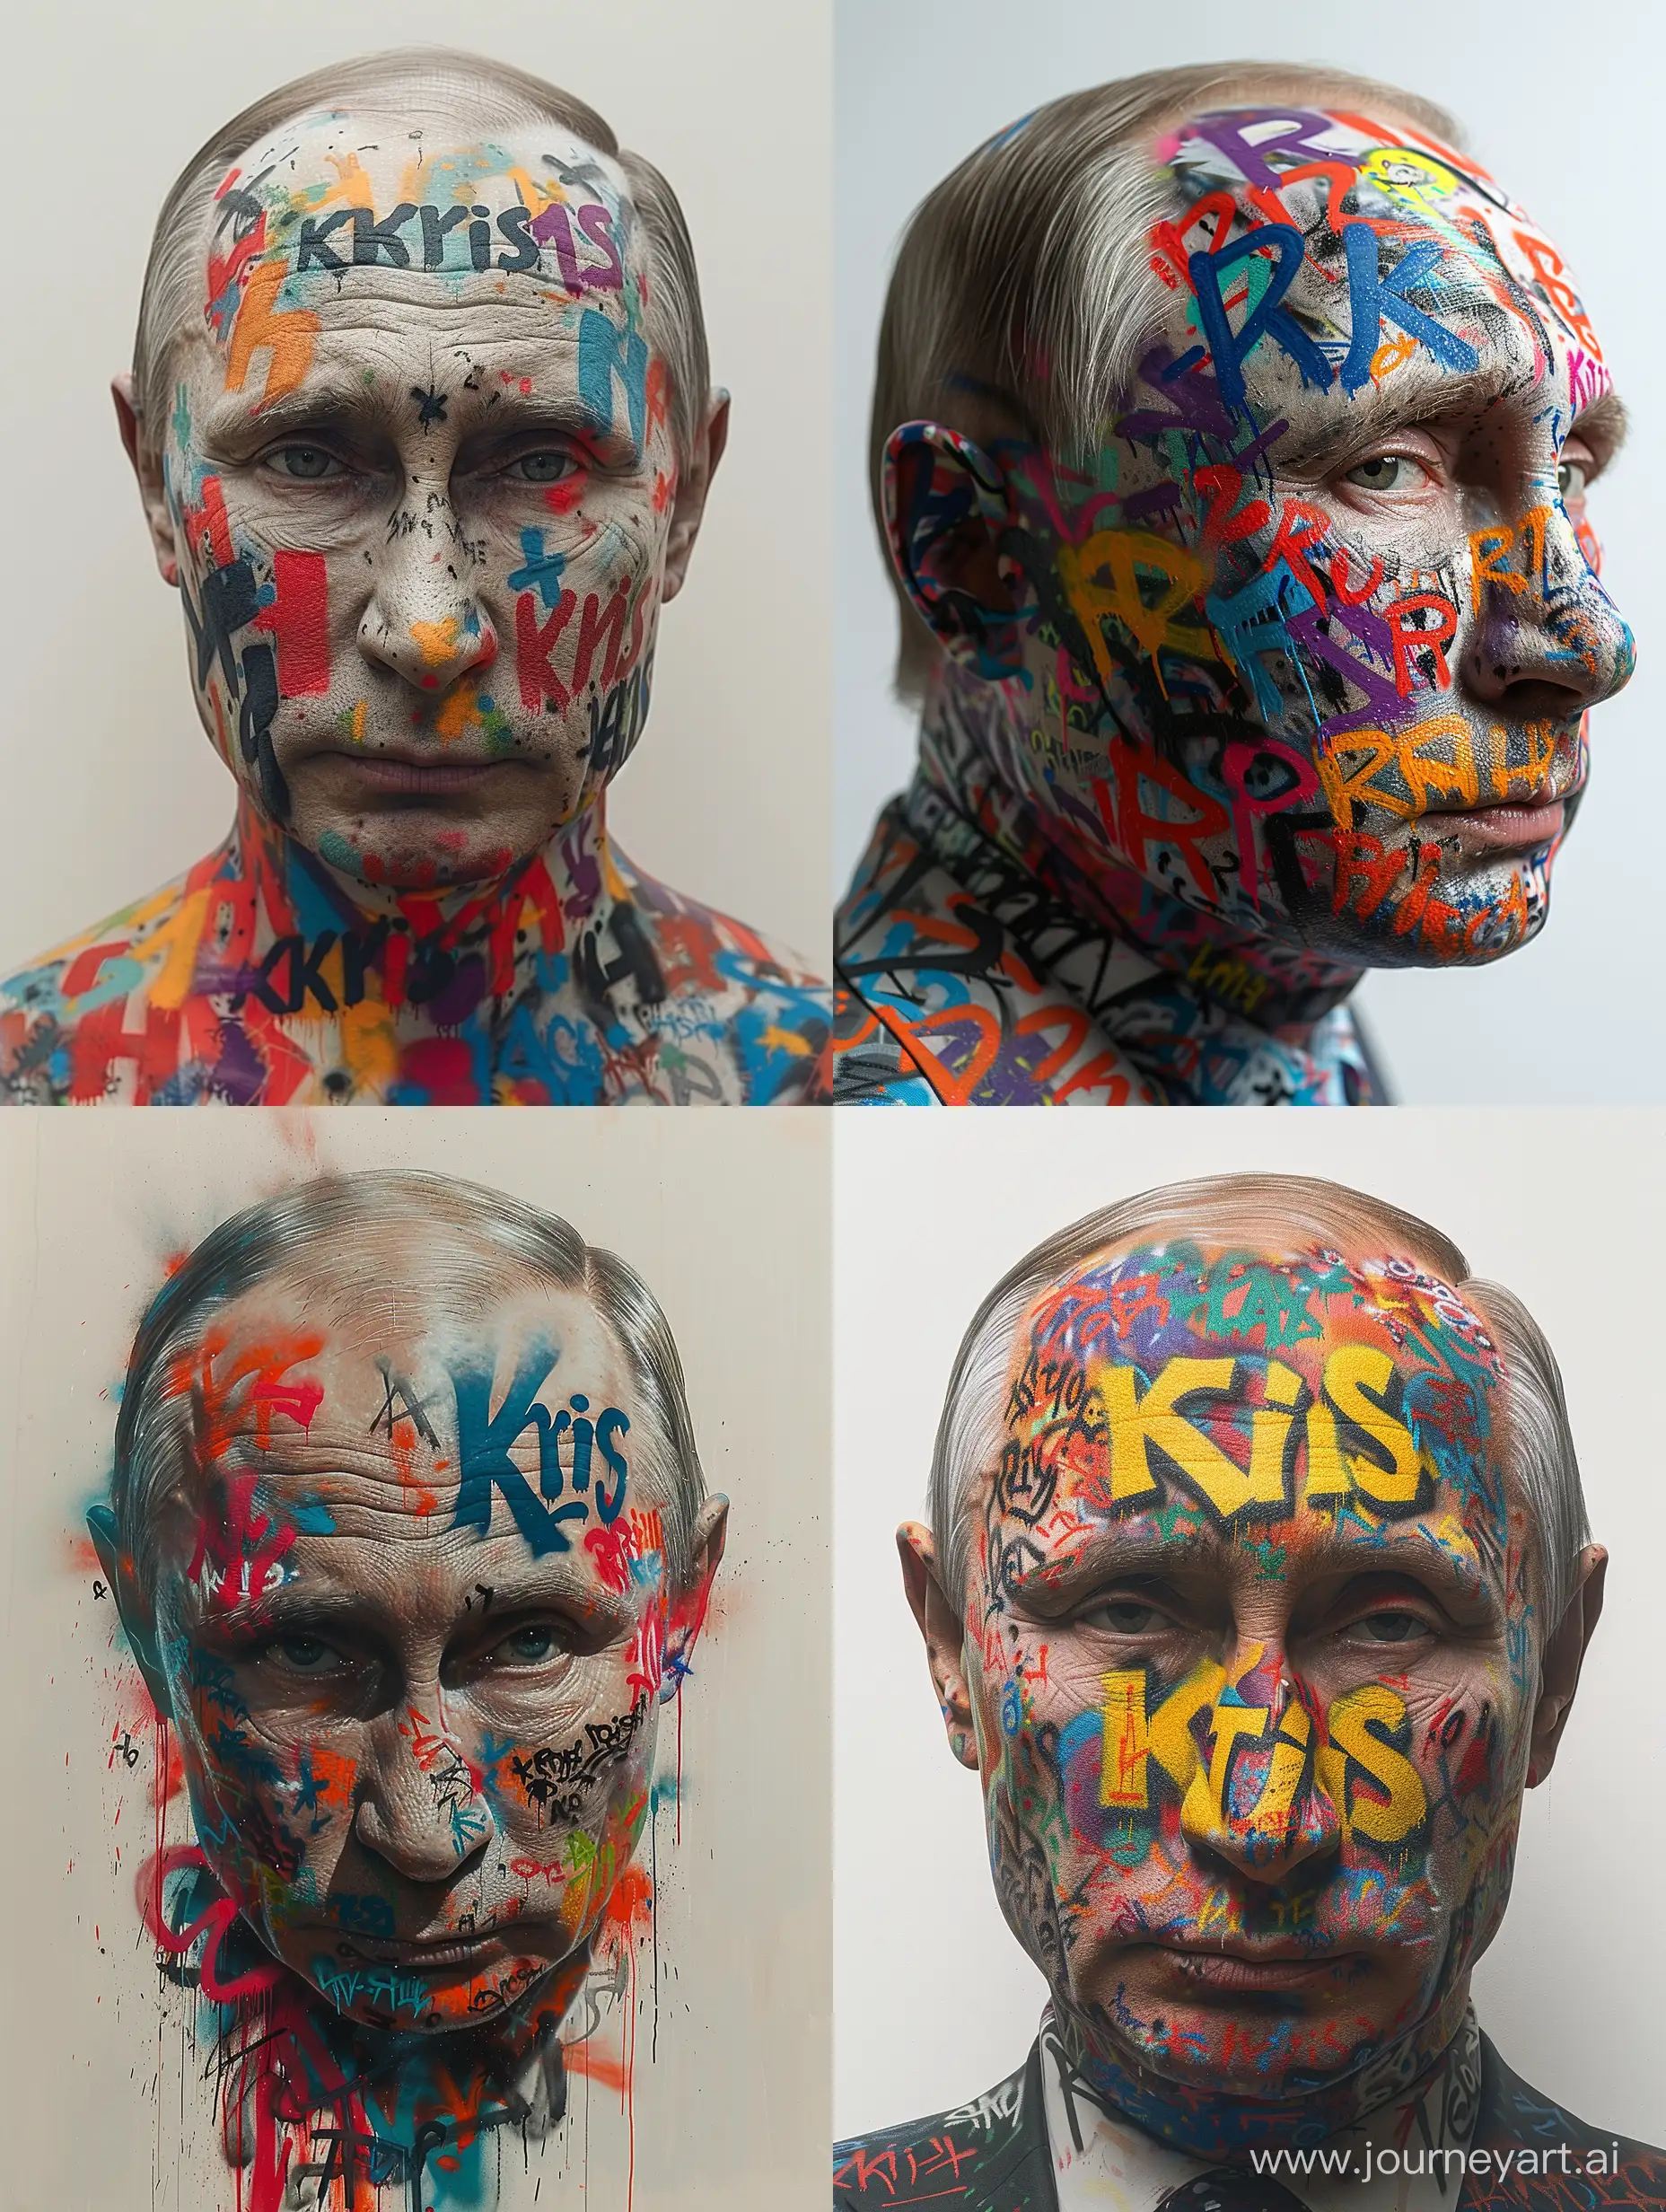 Vladimir-Putin-Graffiti-Art-Bold-Krish-Wildstyle-Tagging-on-Minimalist-White-Background